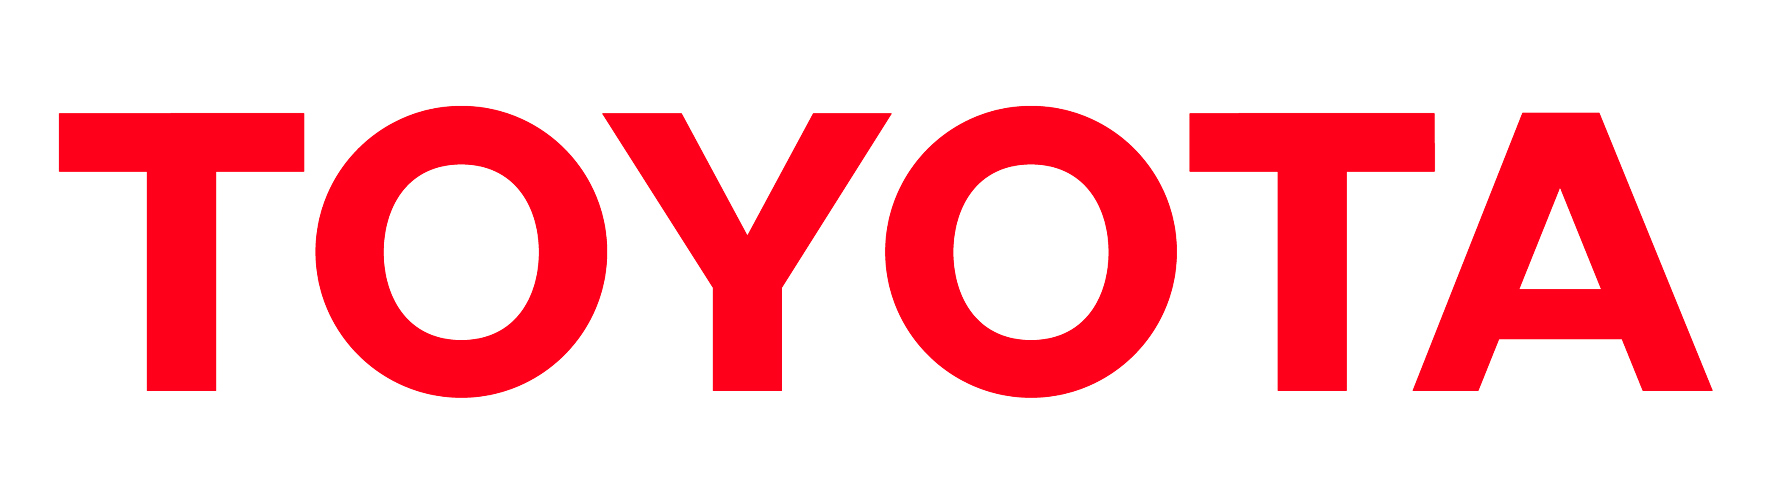 Toyota_corporatelogo.jpg